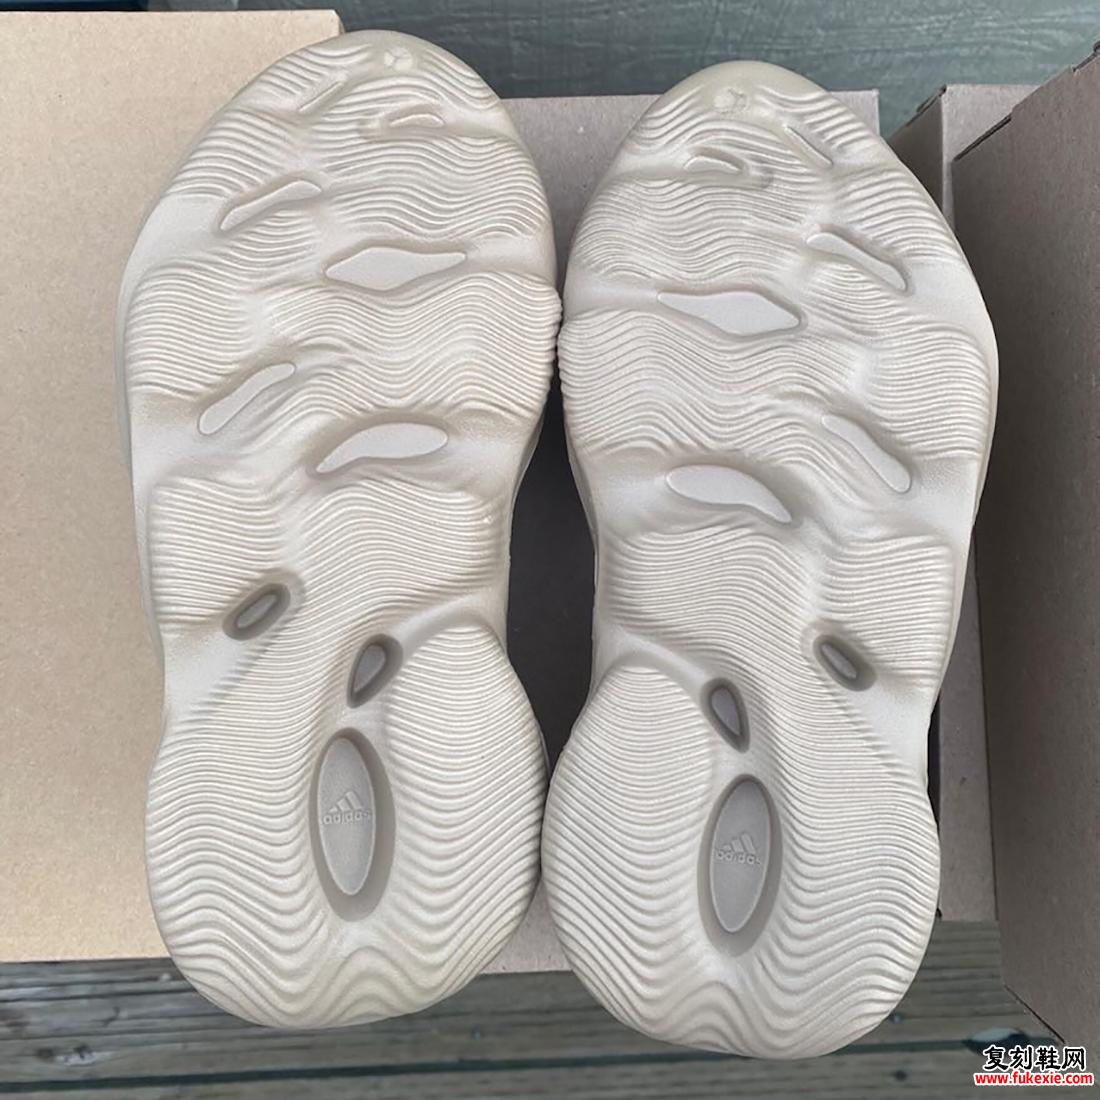 adidas Yeezy Foam Runner Mist GV6774 发布日期